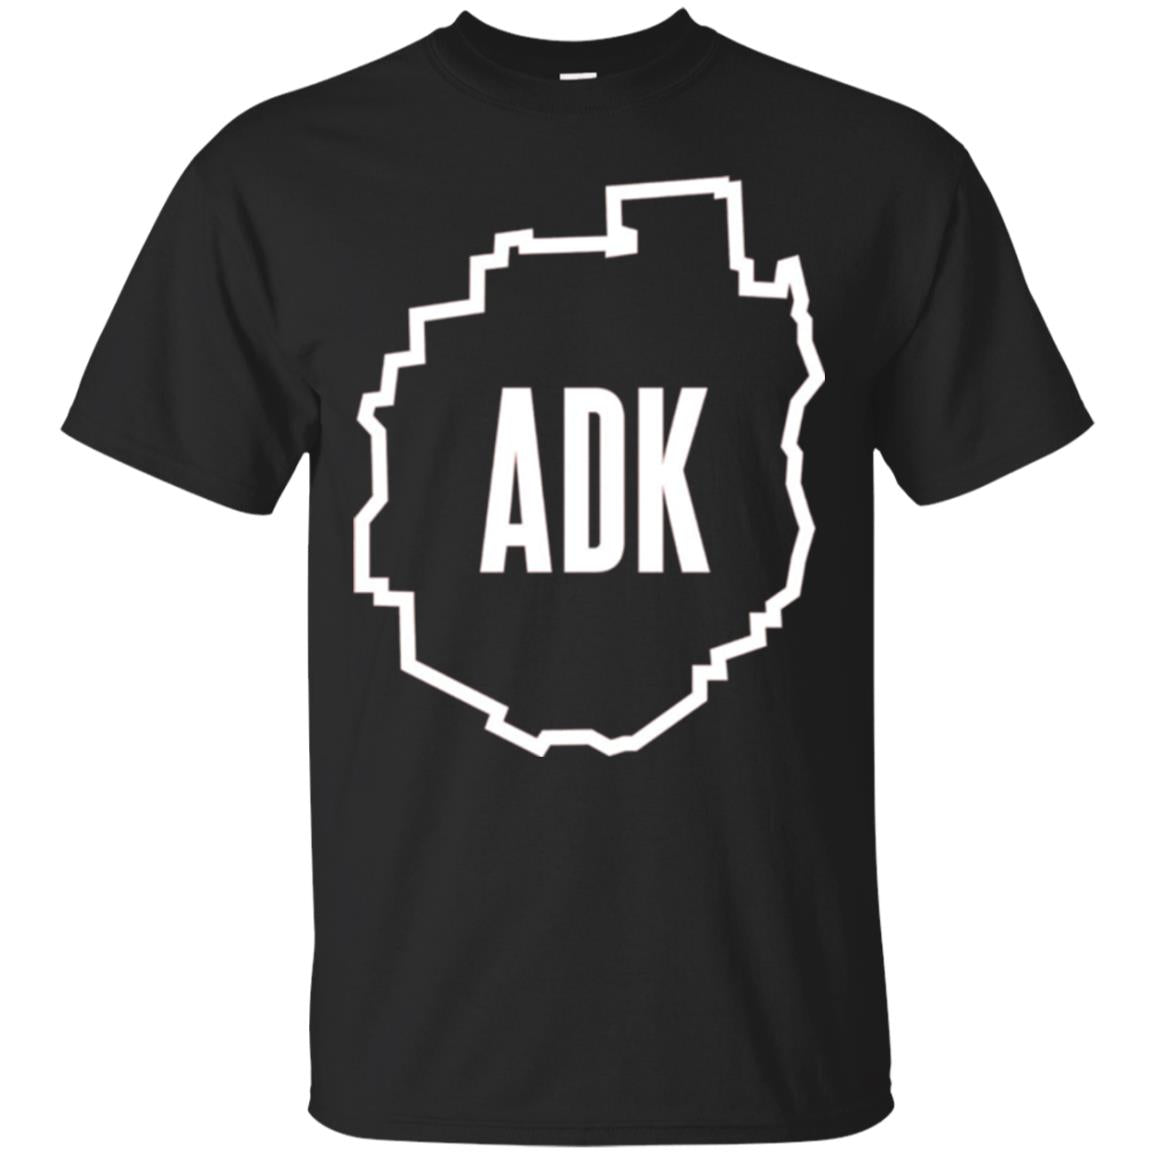 Adirondacks Adk T-shirt